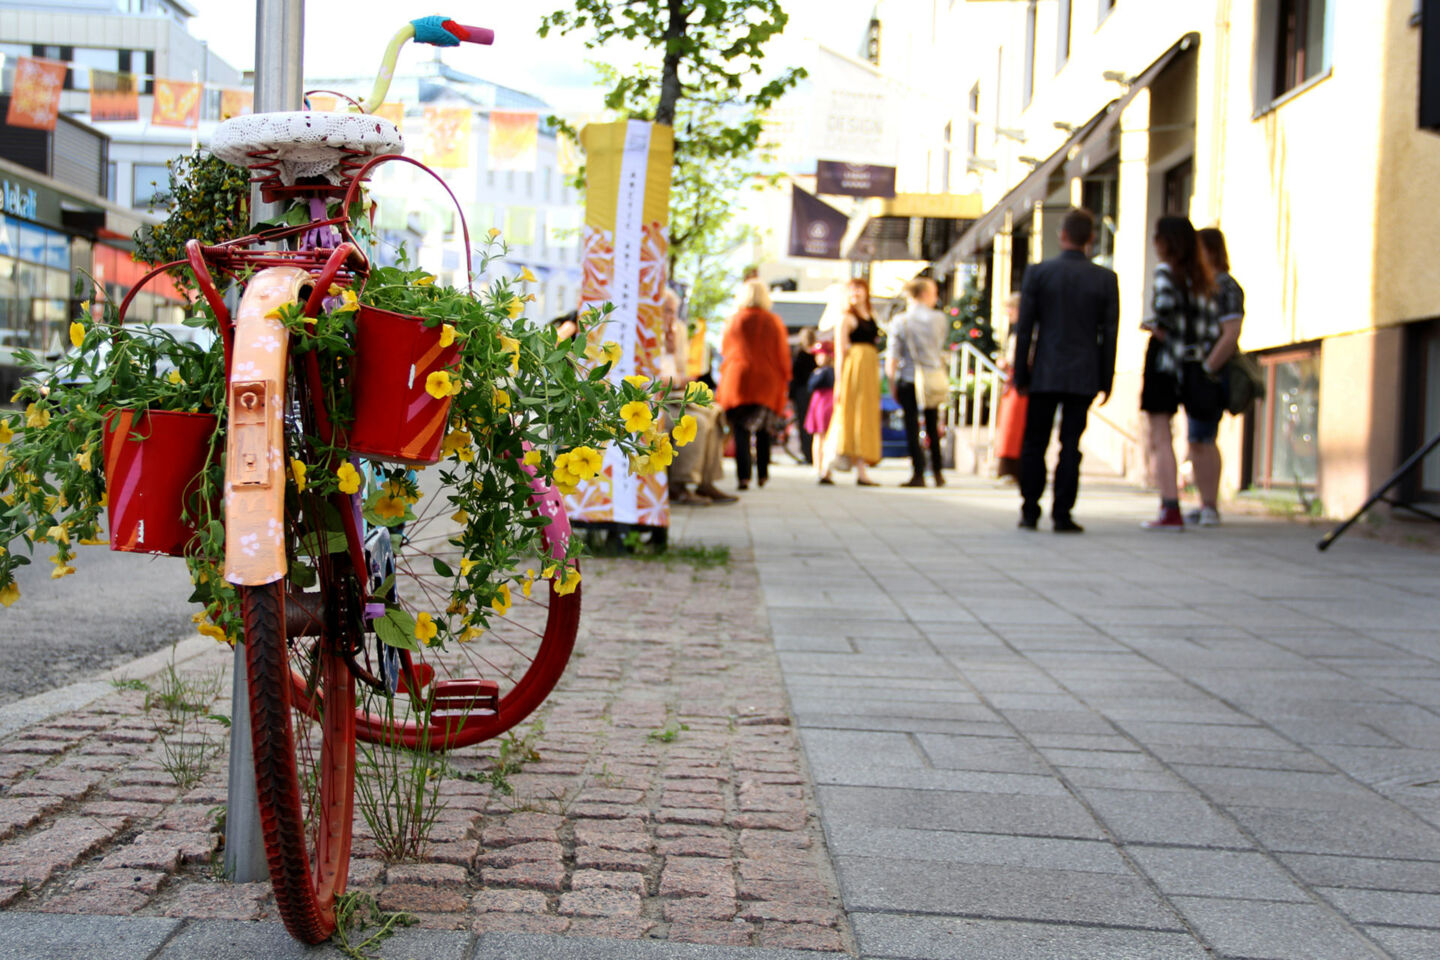 Street-level culture in downtown Rovaniemi, Finland